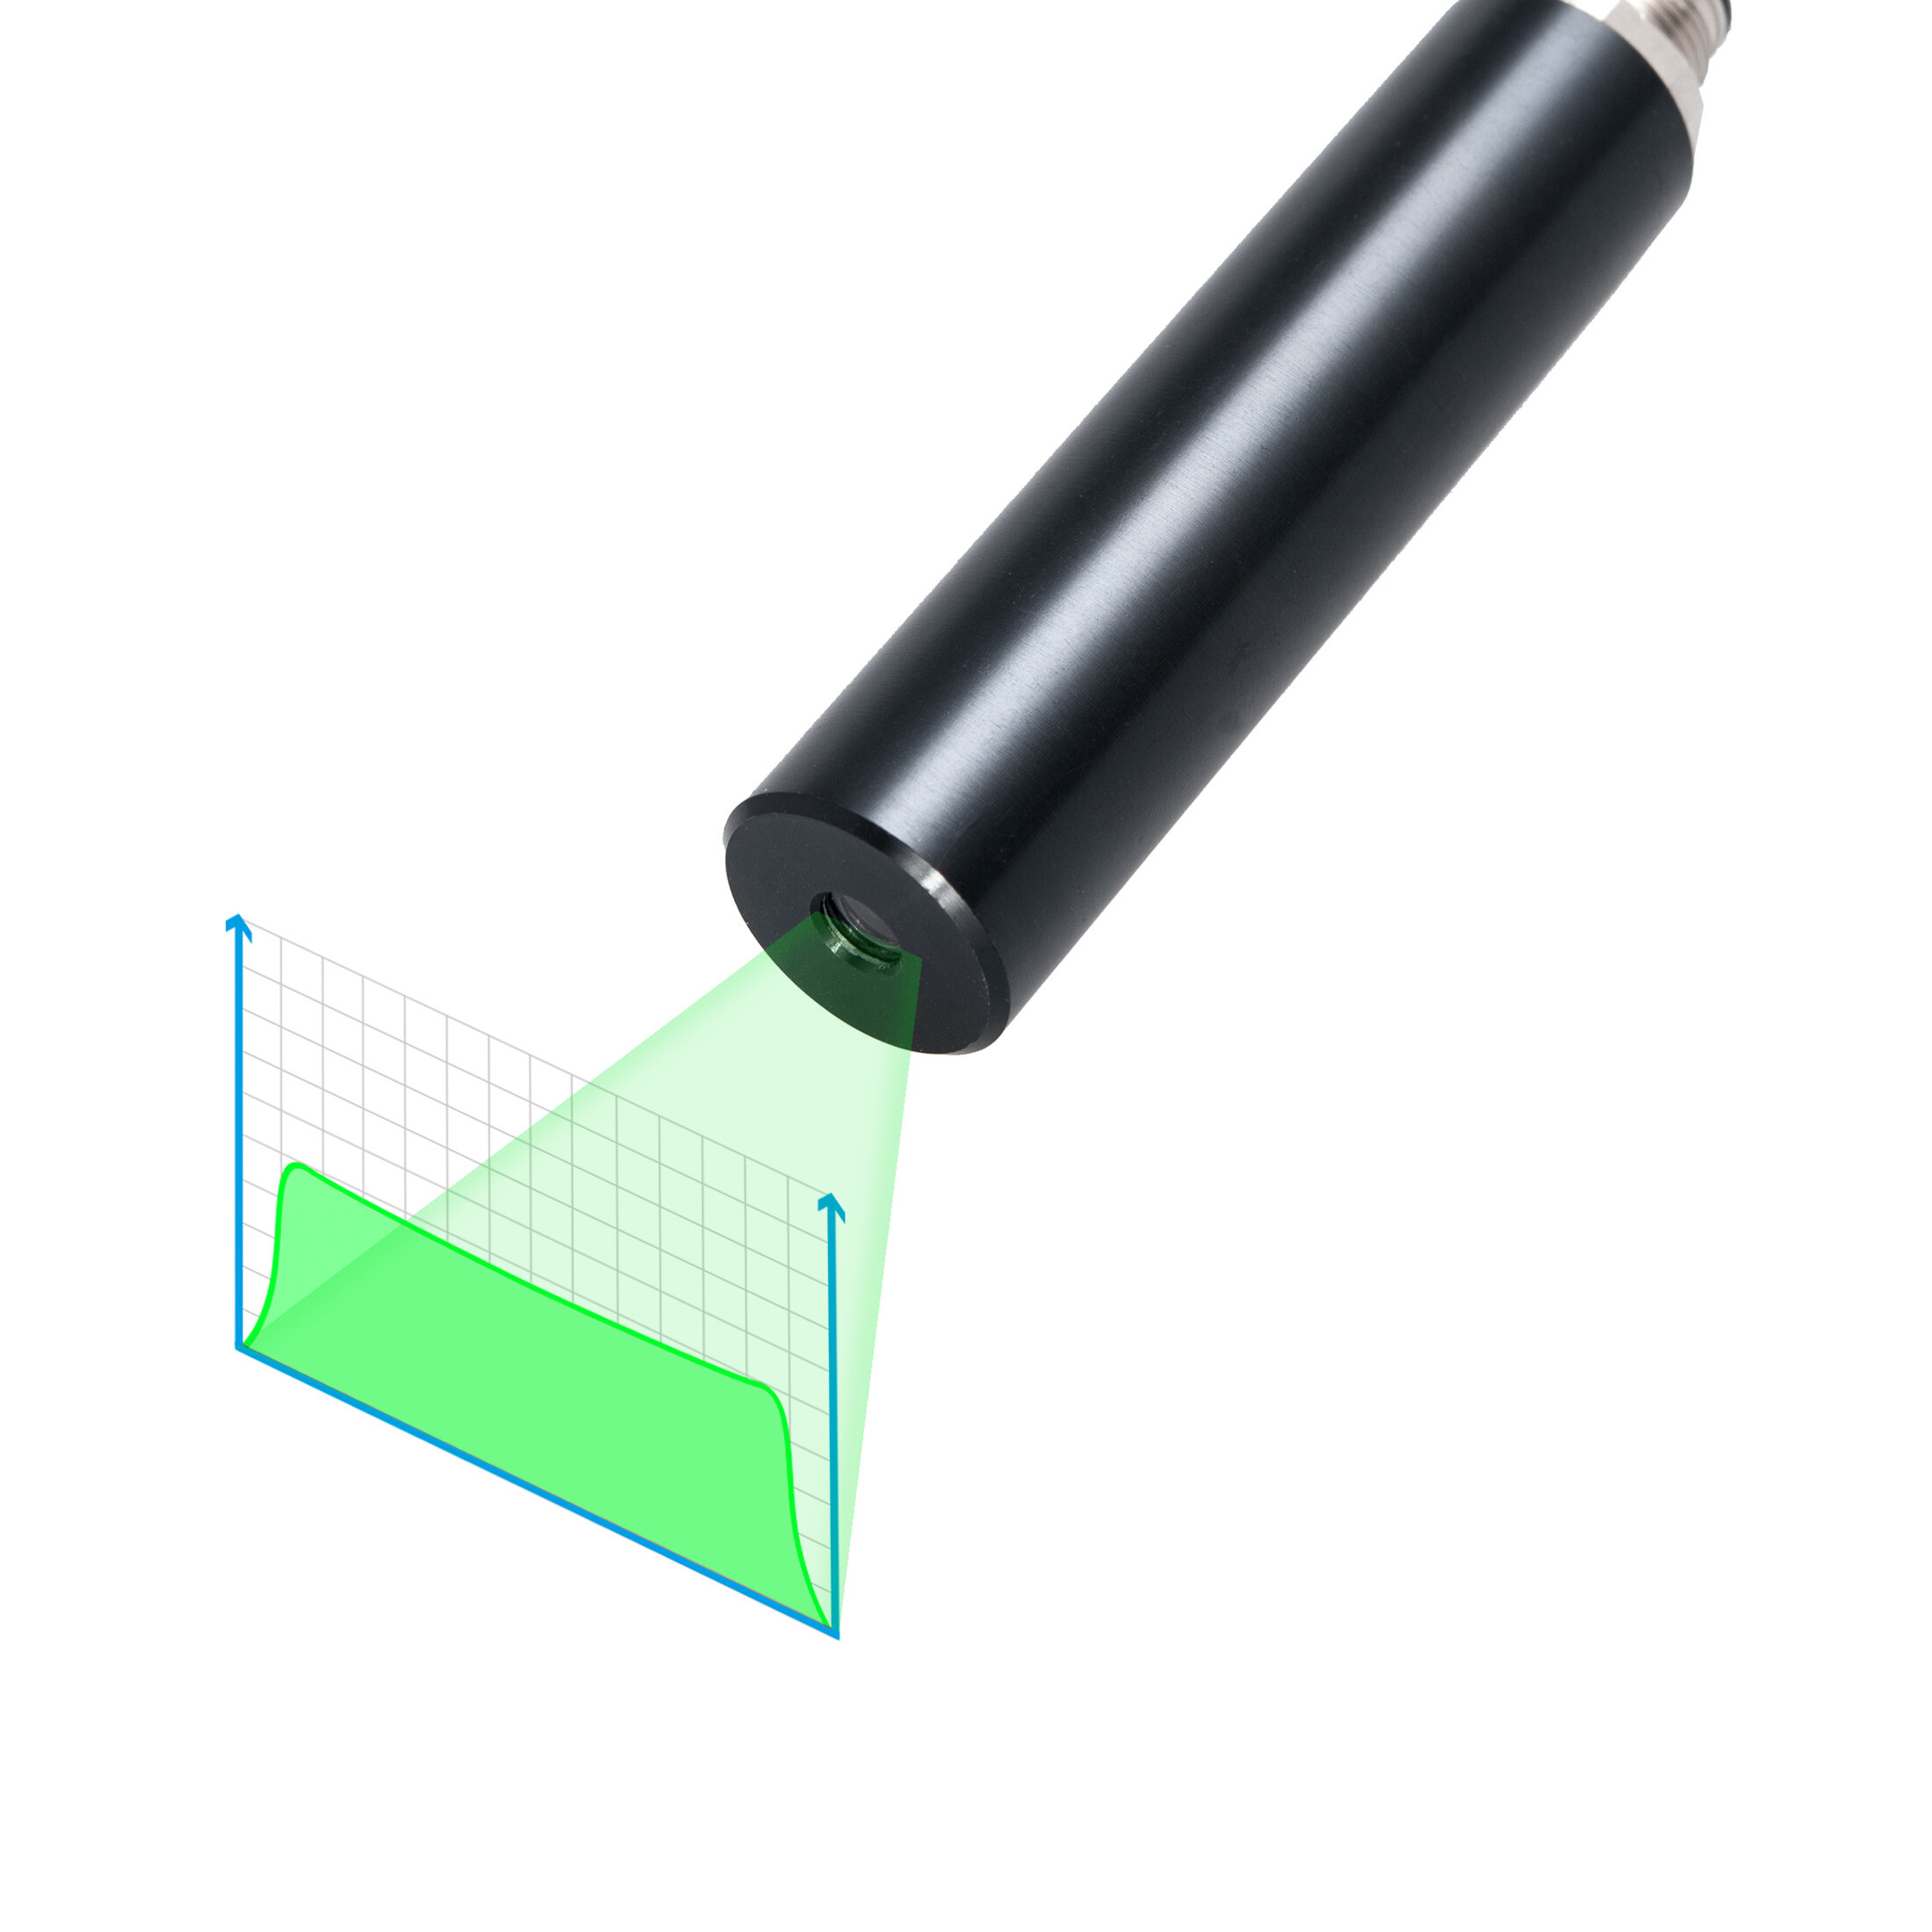 Linienlaser, grün, 520 nm, 110 °, 10 mW, 24 V DC, Ø32x115 mm, Laserklasse 2M, Fokus fixed (3000mm),…